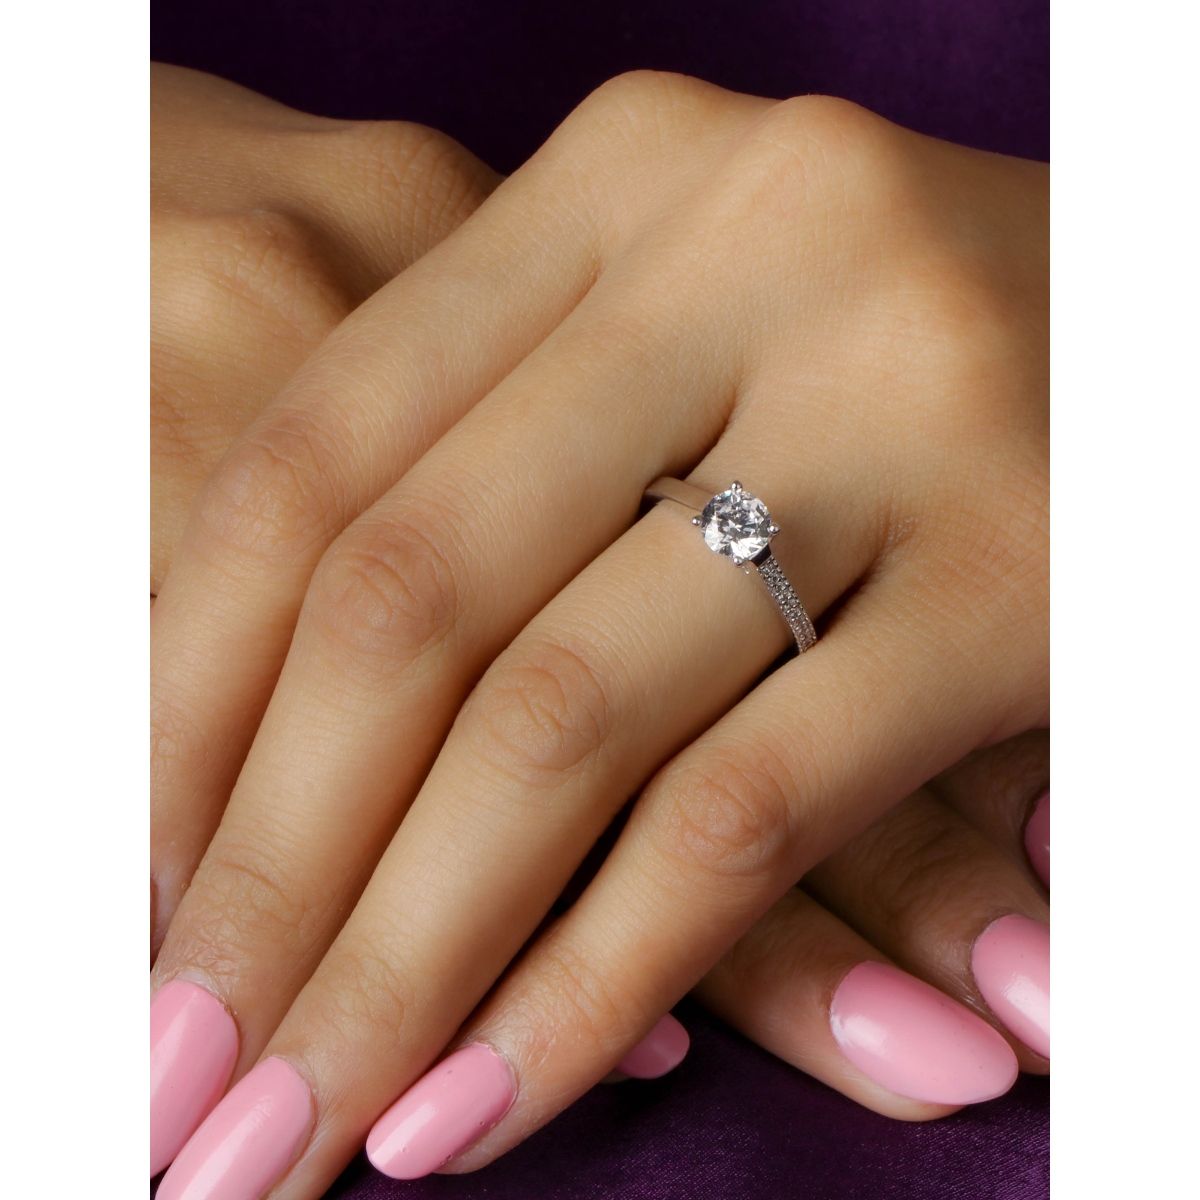 Buy 14K Pure Gold Ring for Women/ Solitaire Wedding Ring/ Moissanite Diamond  Engagement Ring/pear Shaped Wedding Ring/ Pear Cut Gold Ring Online in  India - Etsy